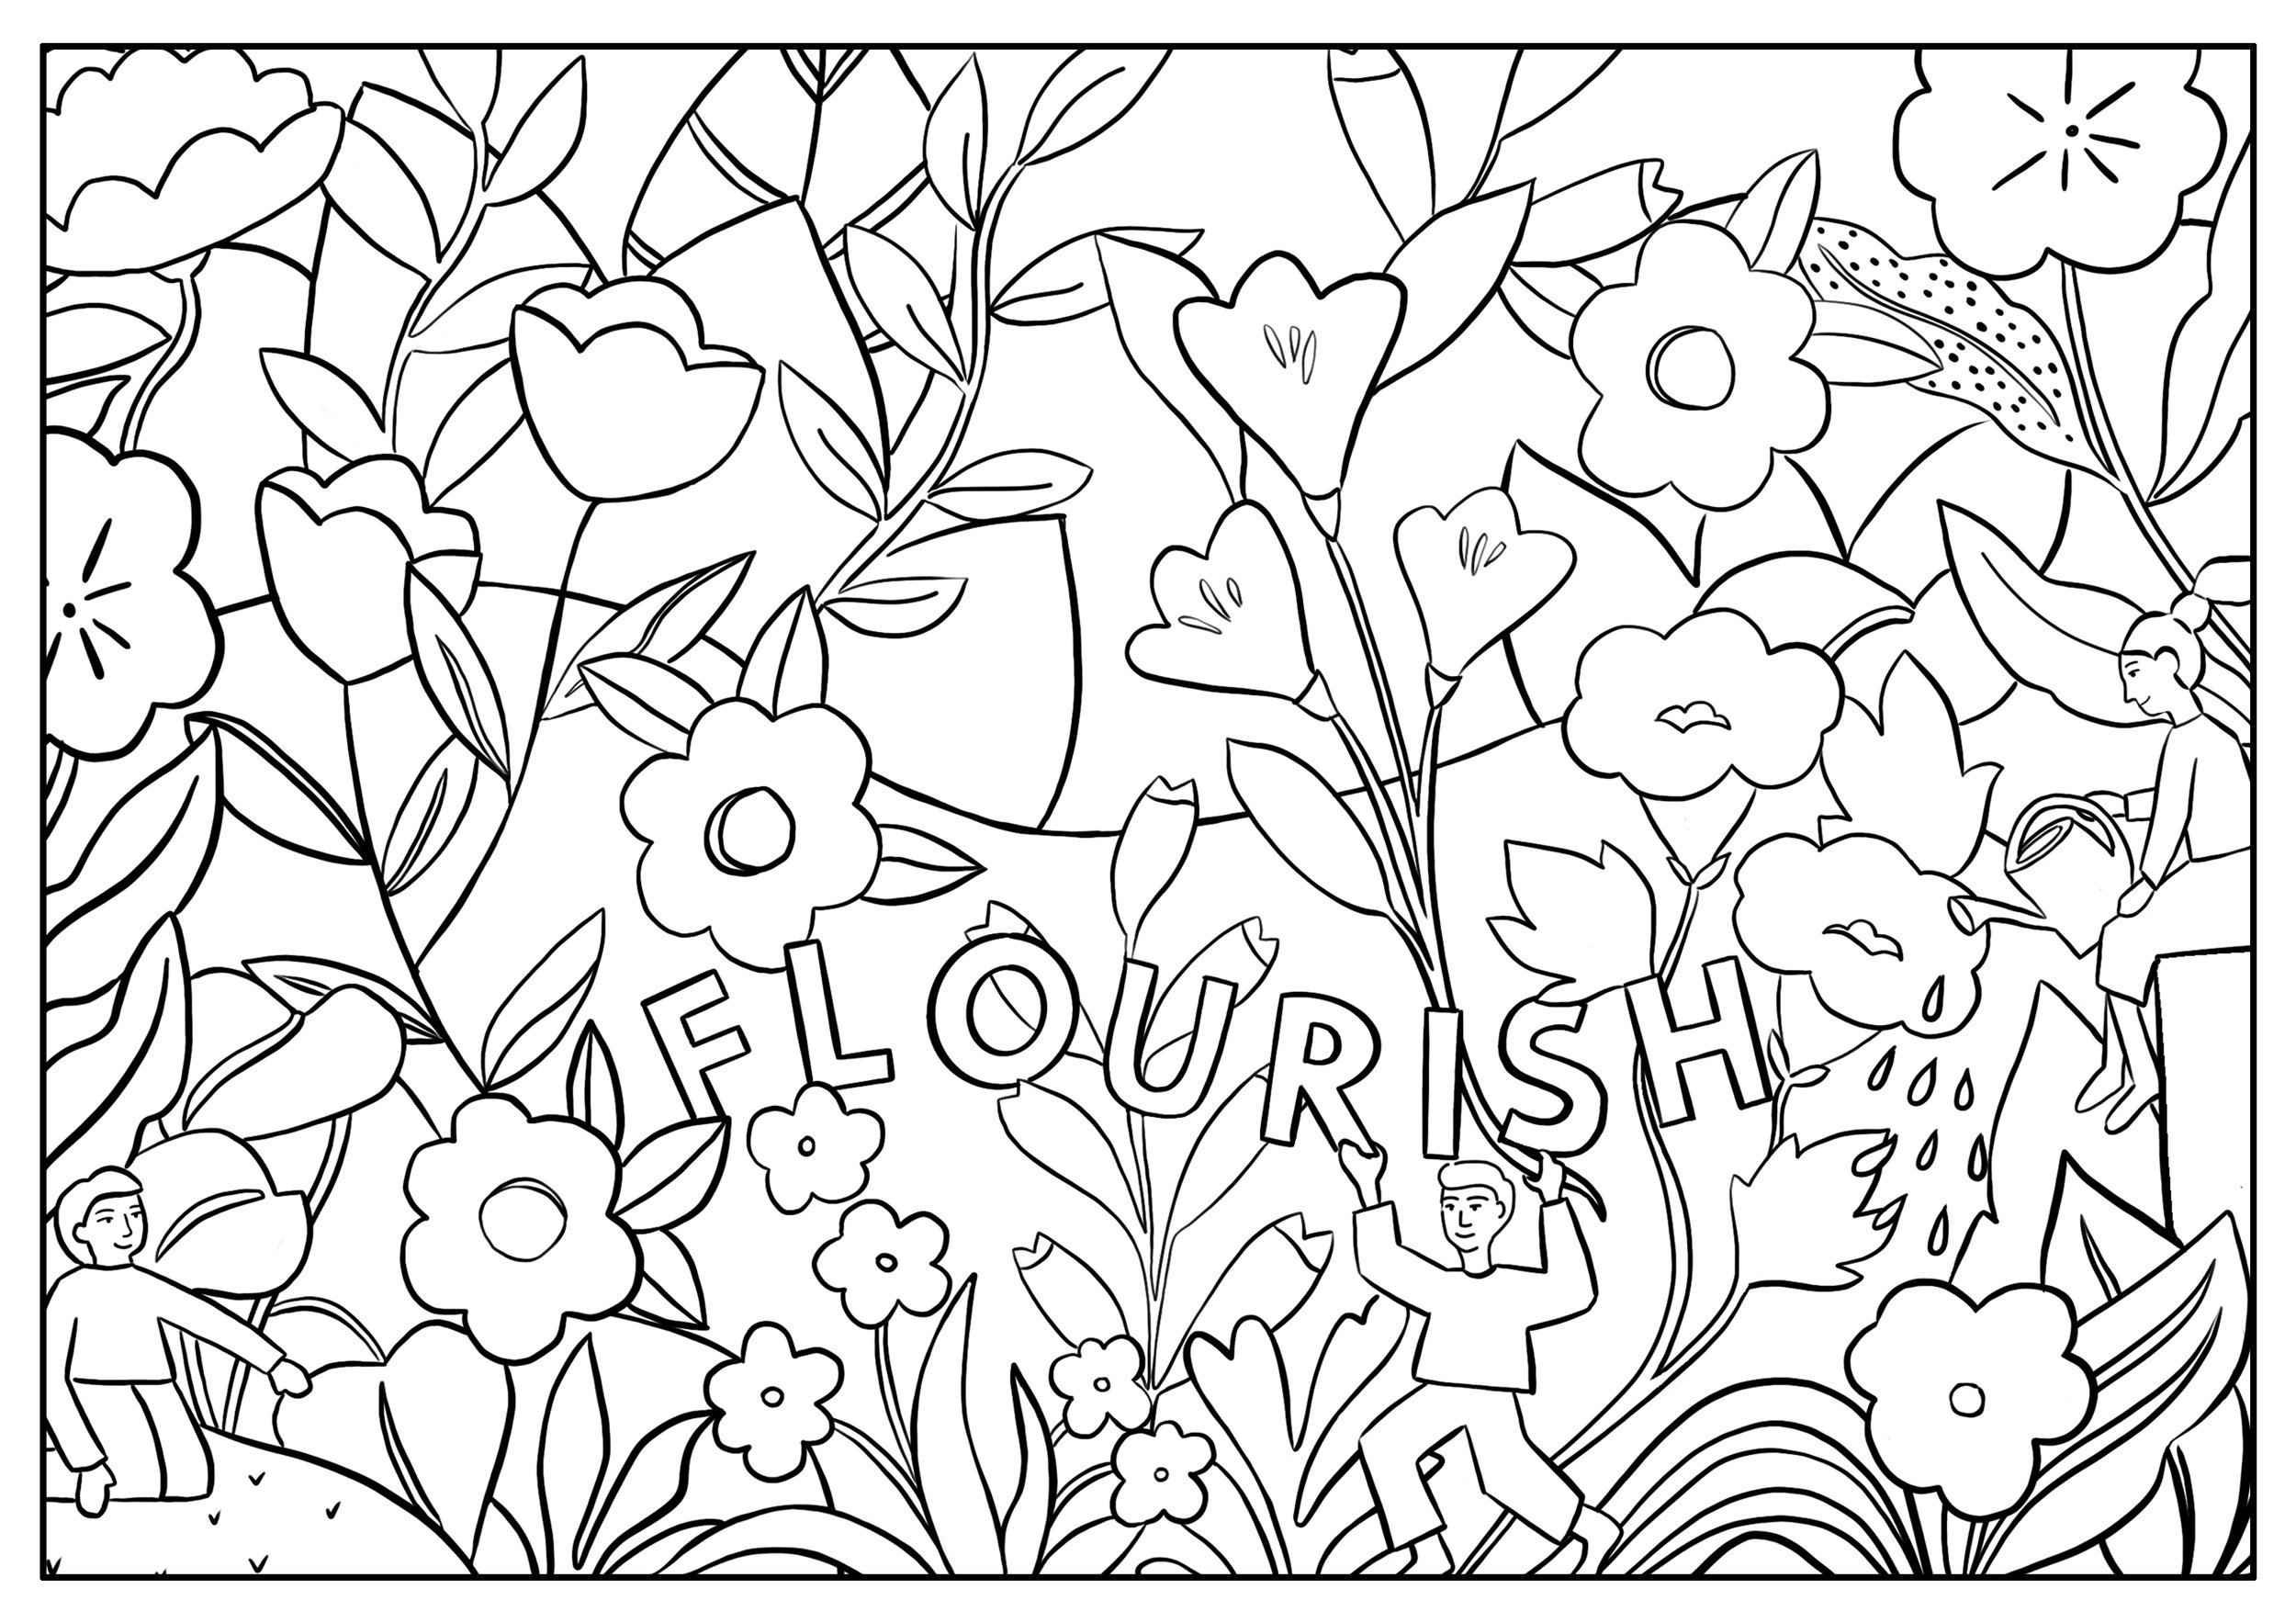 Flourish colouring page2.jpg